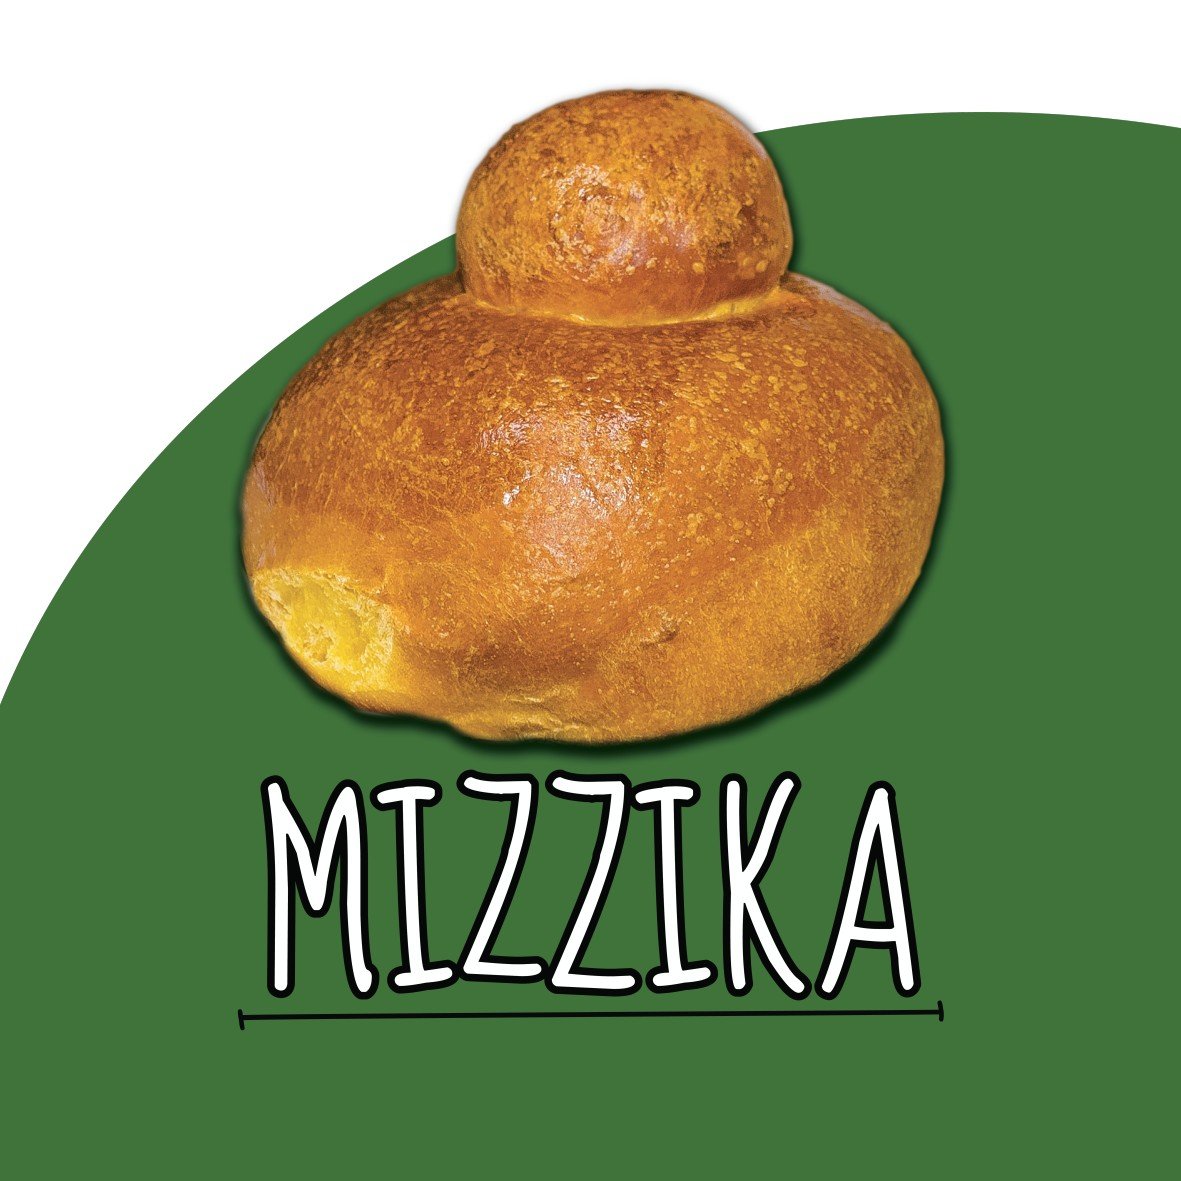 Mizzika